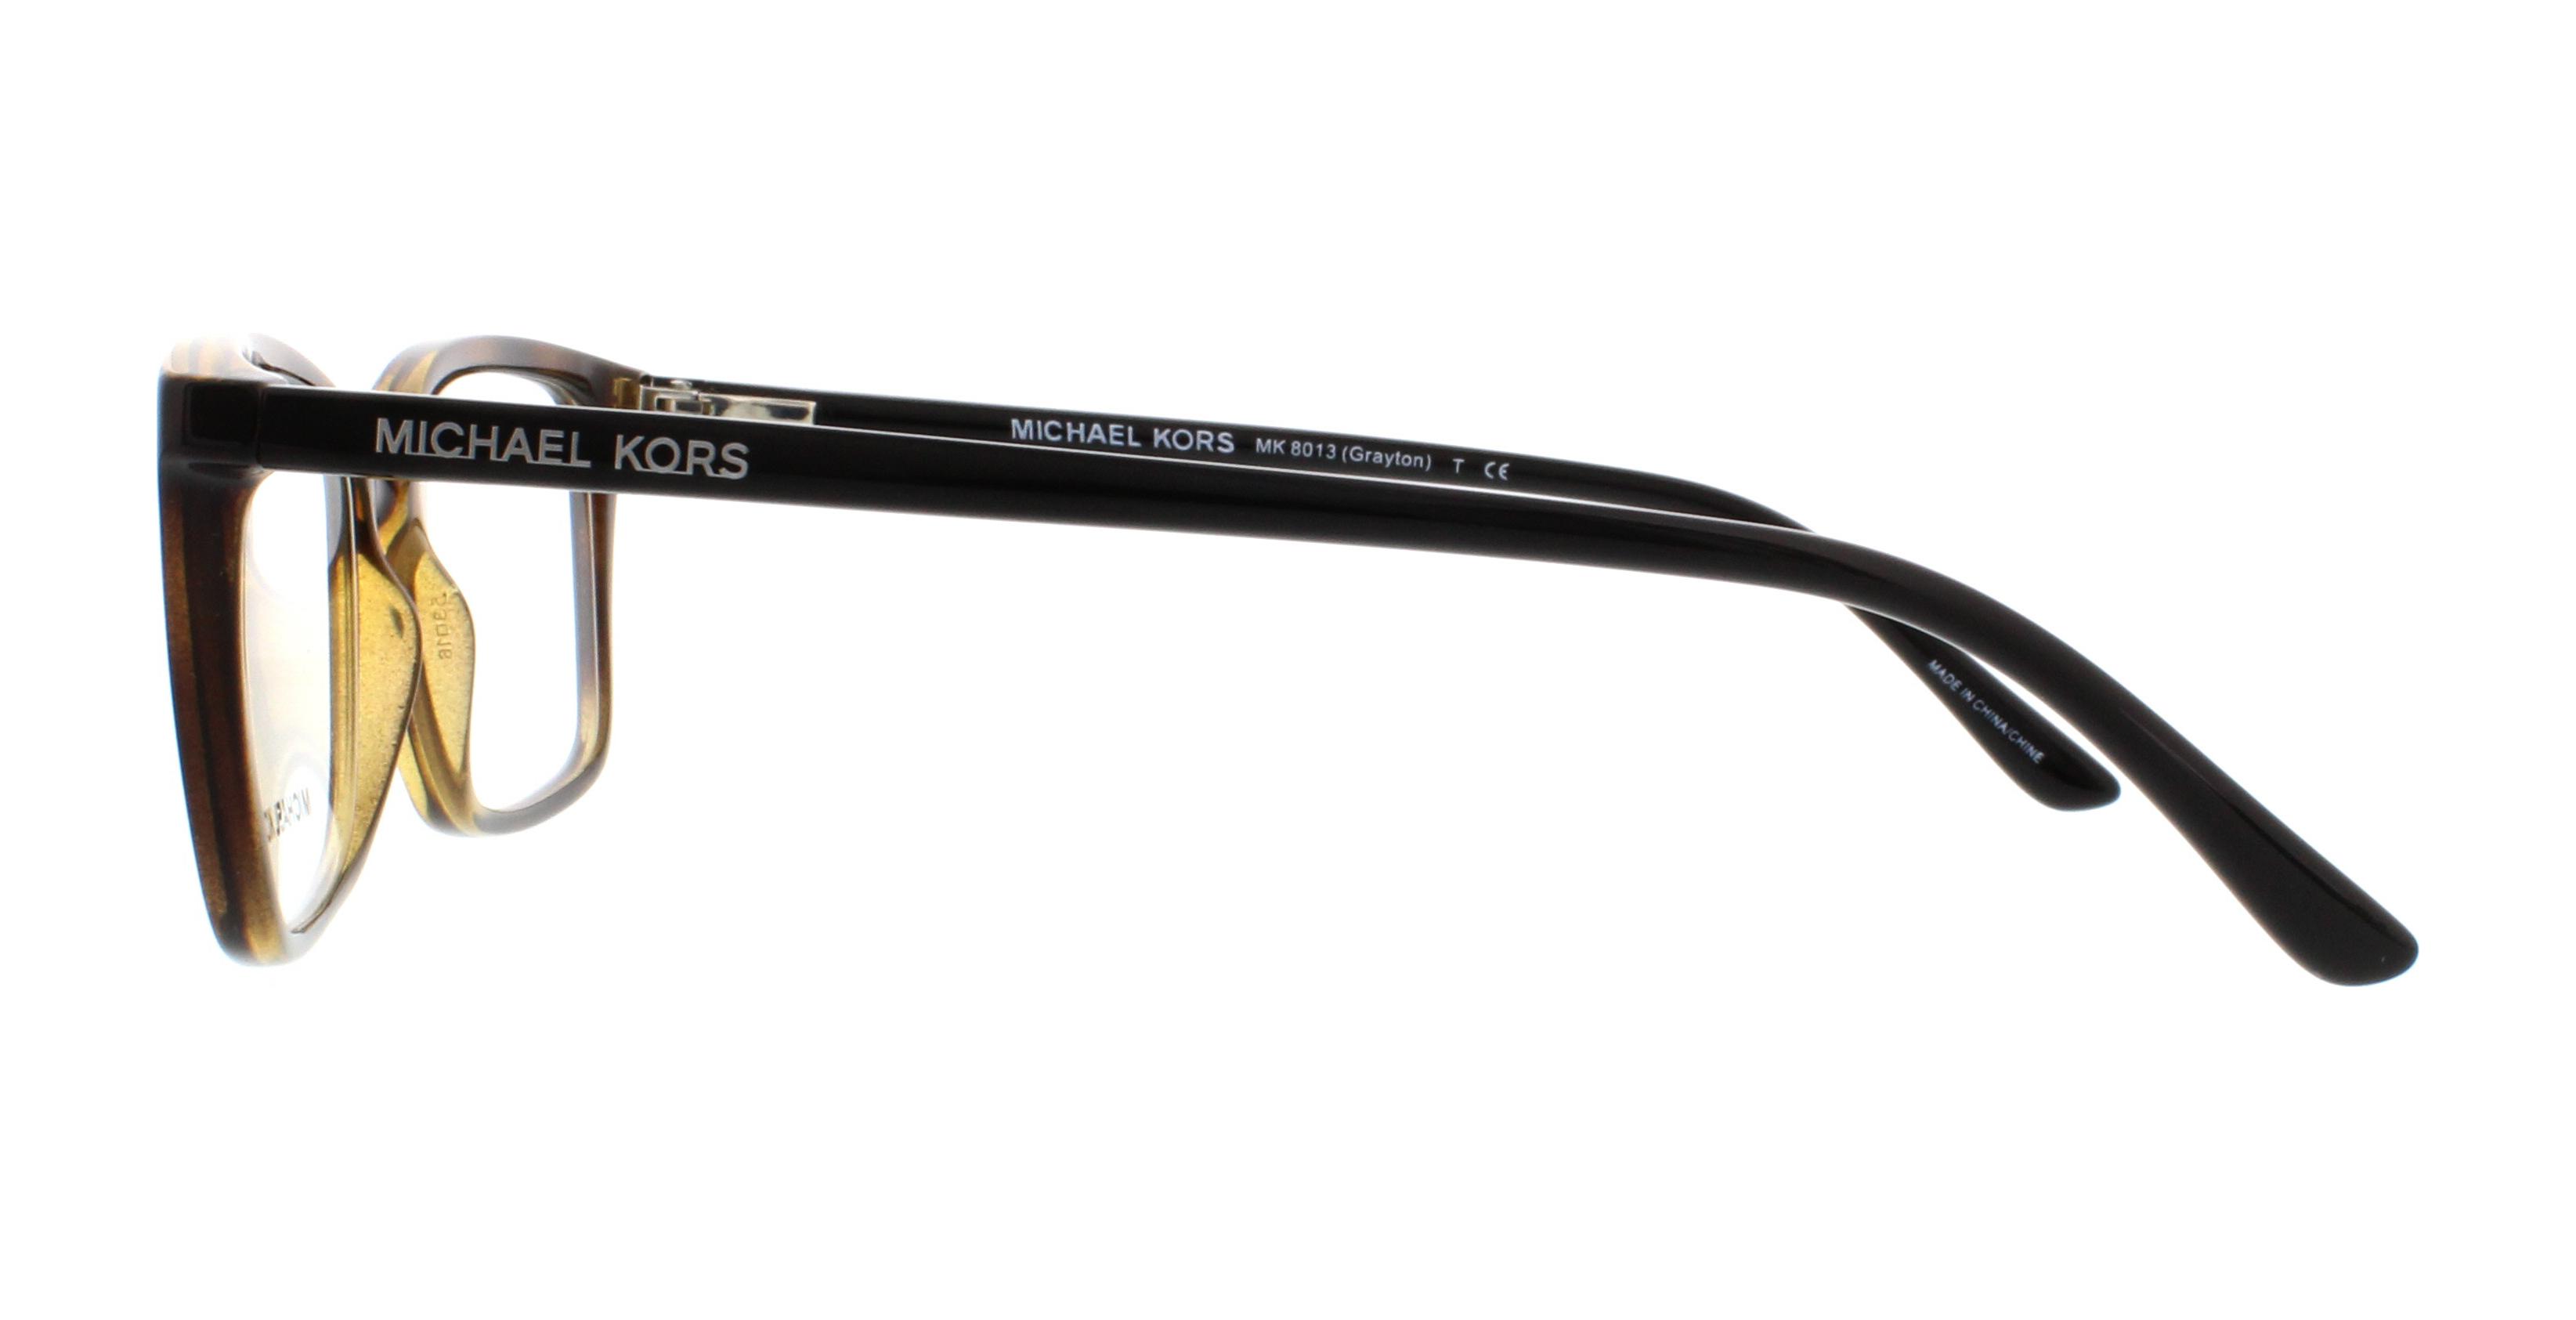 Michael Kors Auckland MK4080U54 Glasses  Clearly